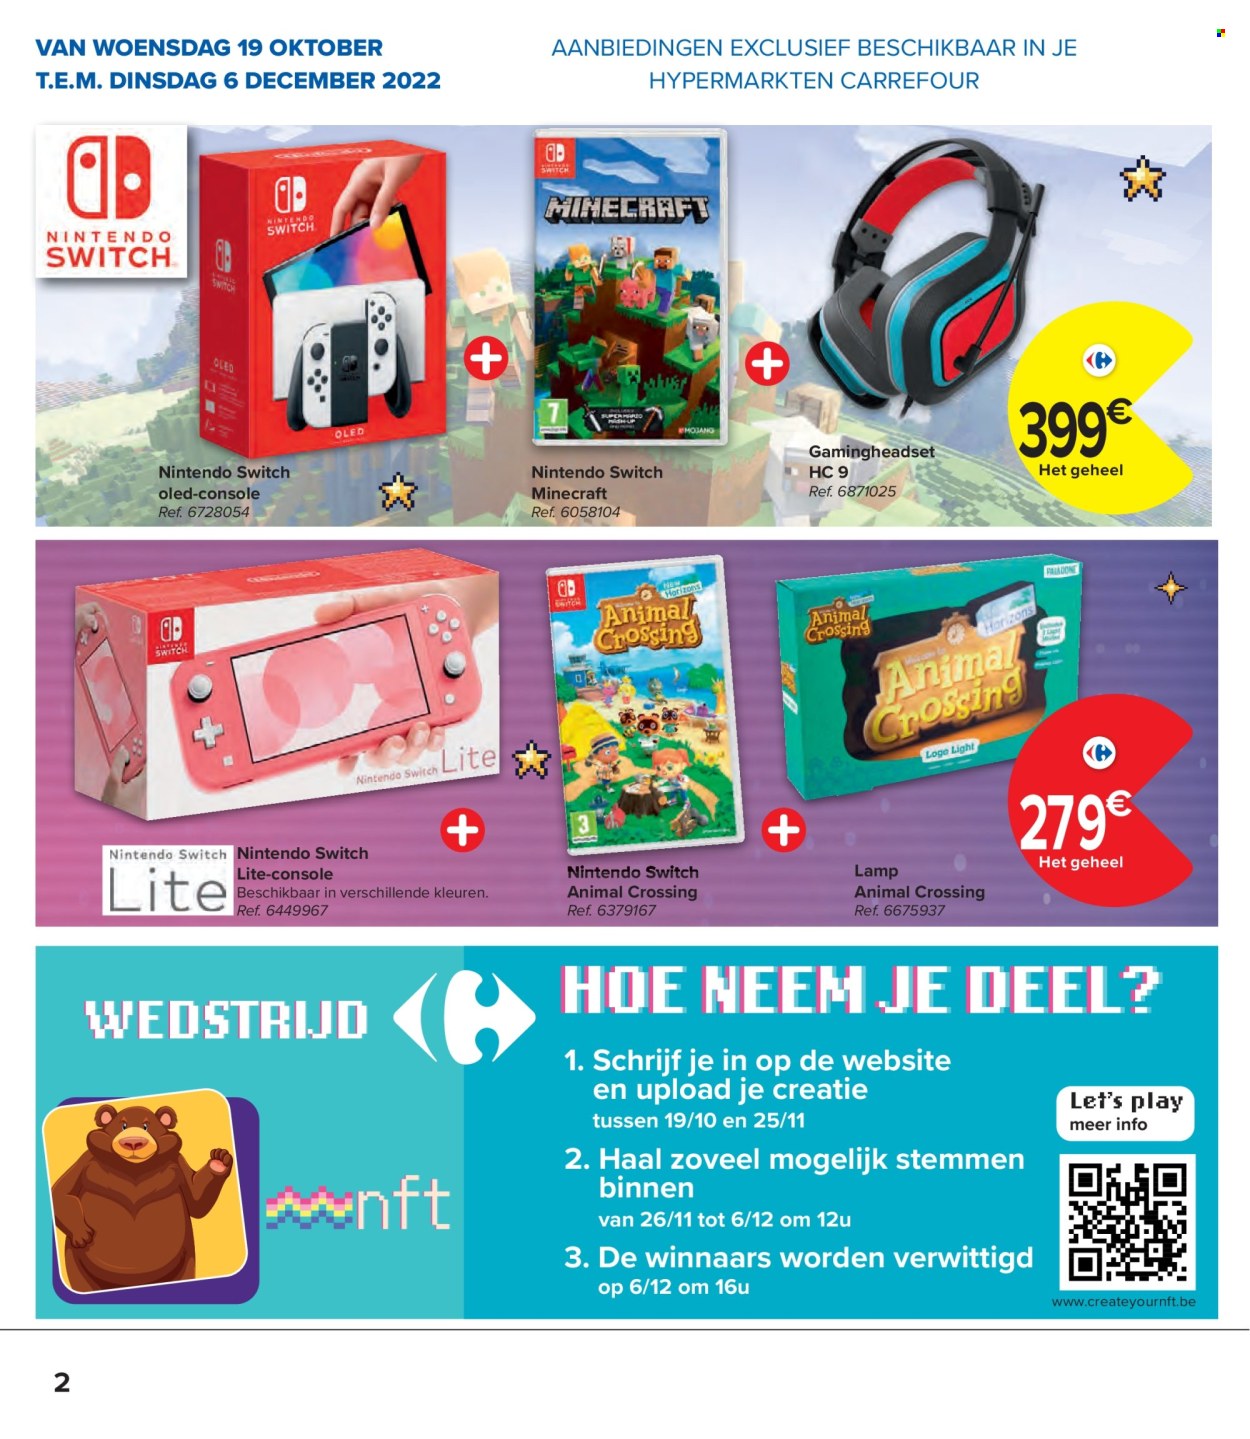 thumbnail - Carrefour hypermarkt-aanbieding - 19/10/2022 - 06/12/2022 -  producten in de aanbieding - switch, Nintendo Switch, lamp. Pagina 2.